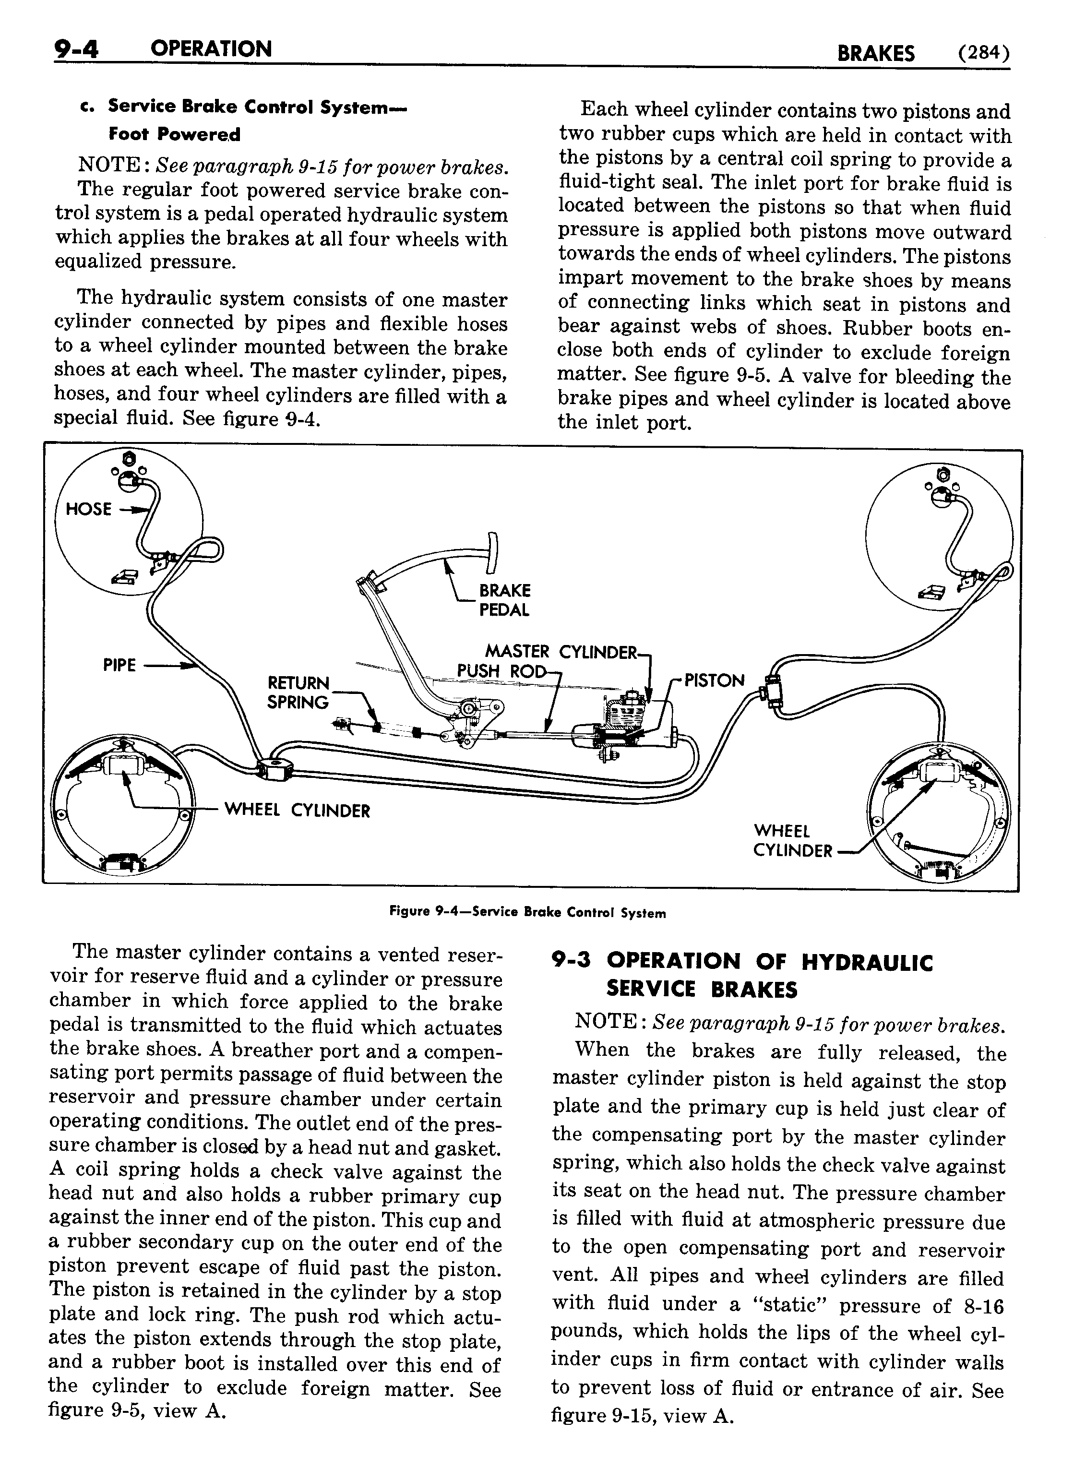 n_10 1954 Buick Shop Manual - Brakes-004-004.jpg